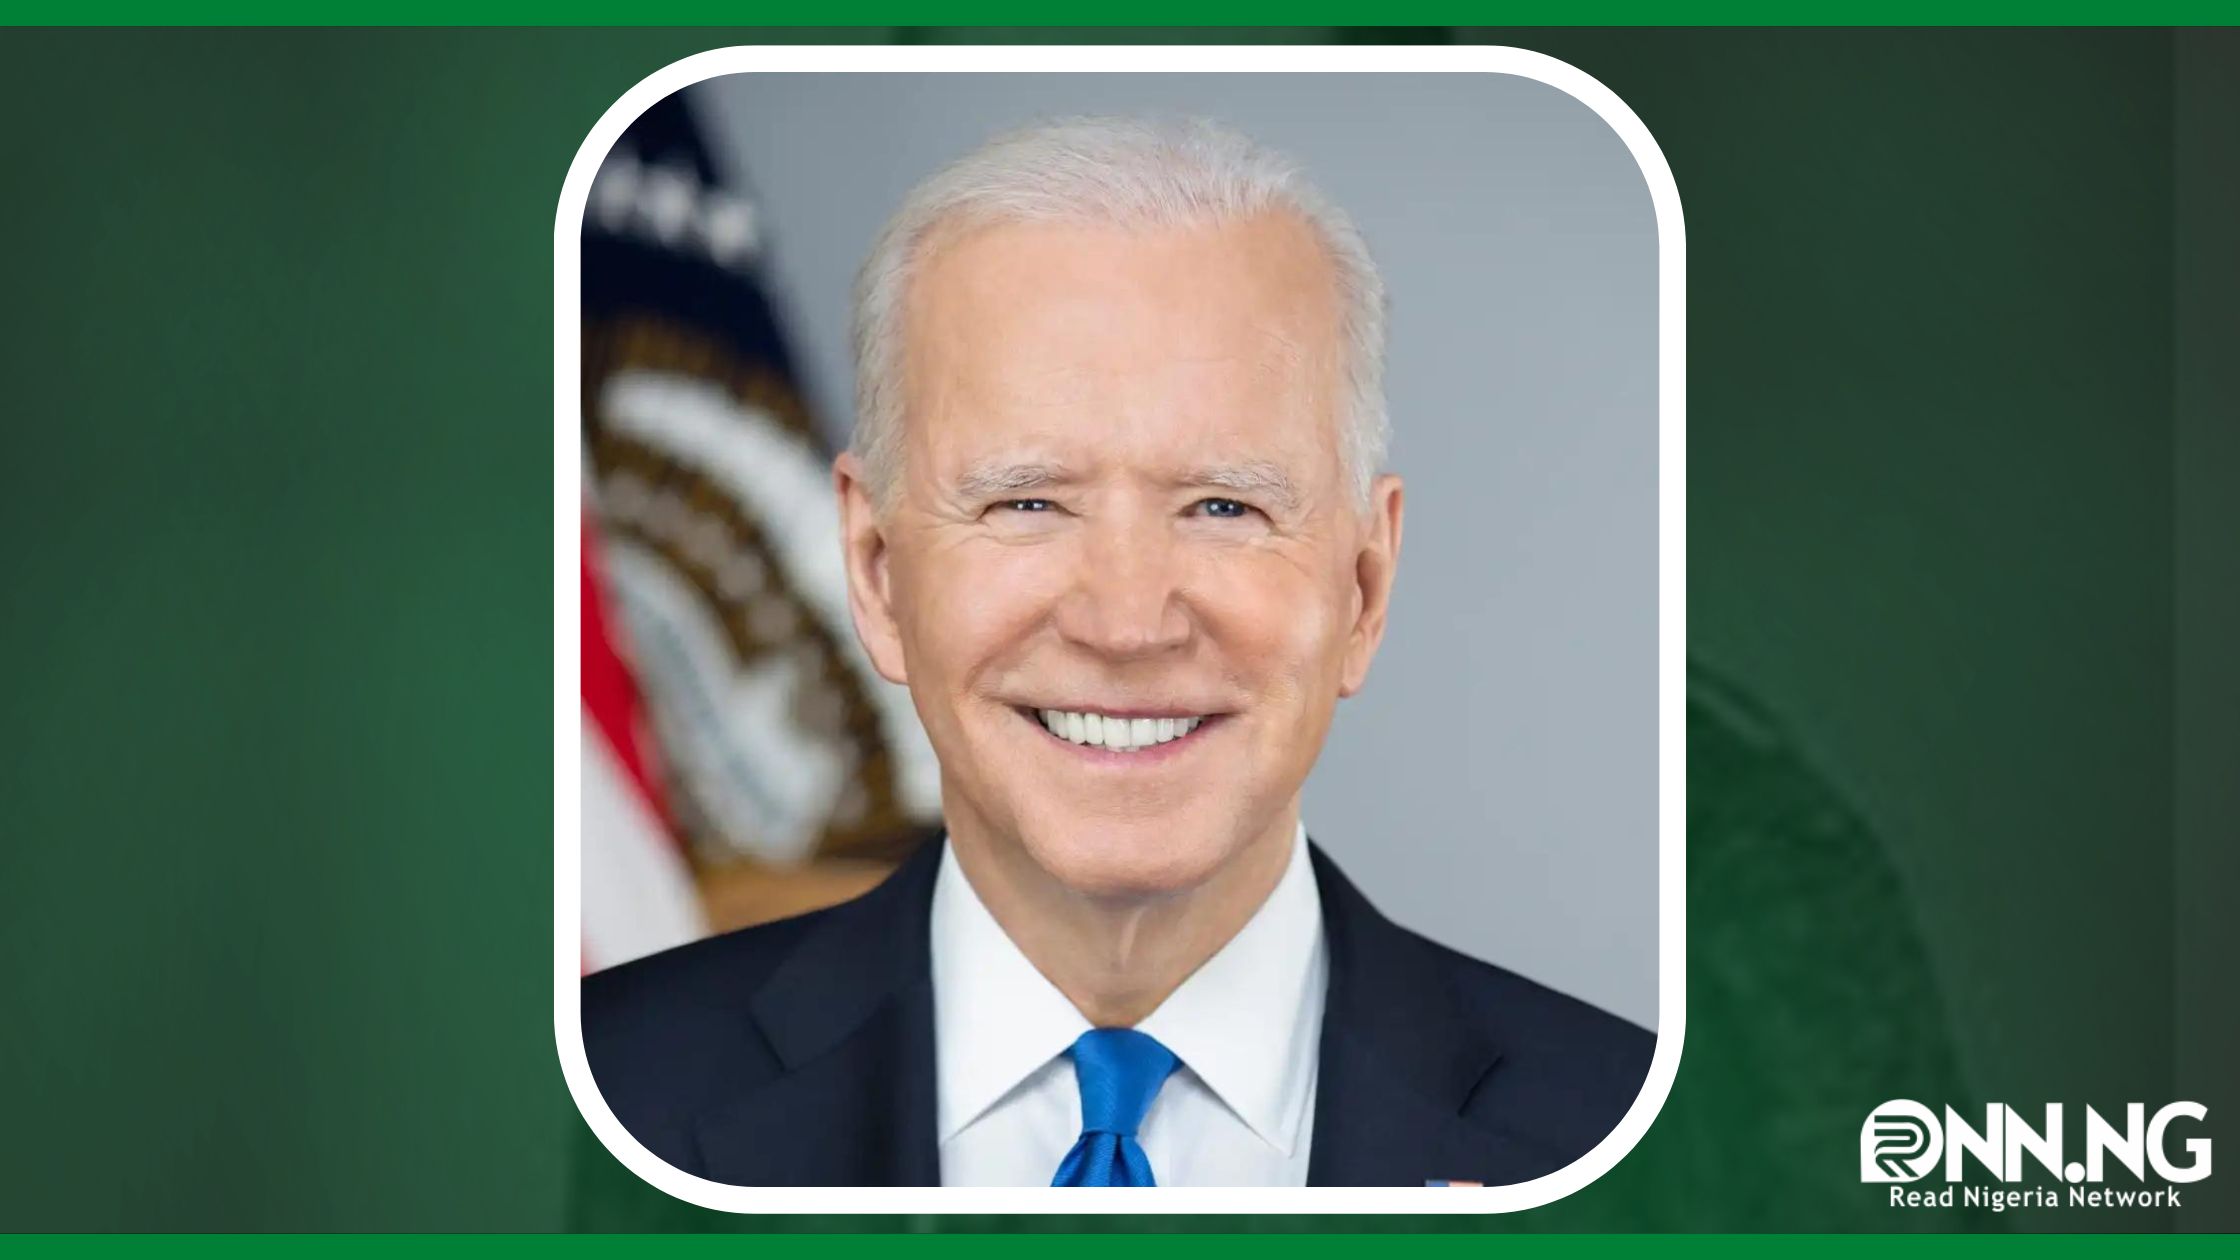 Joe Biden Biography And Net Worth